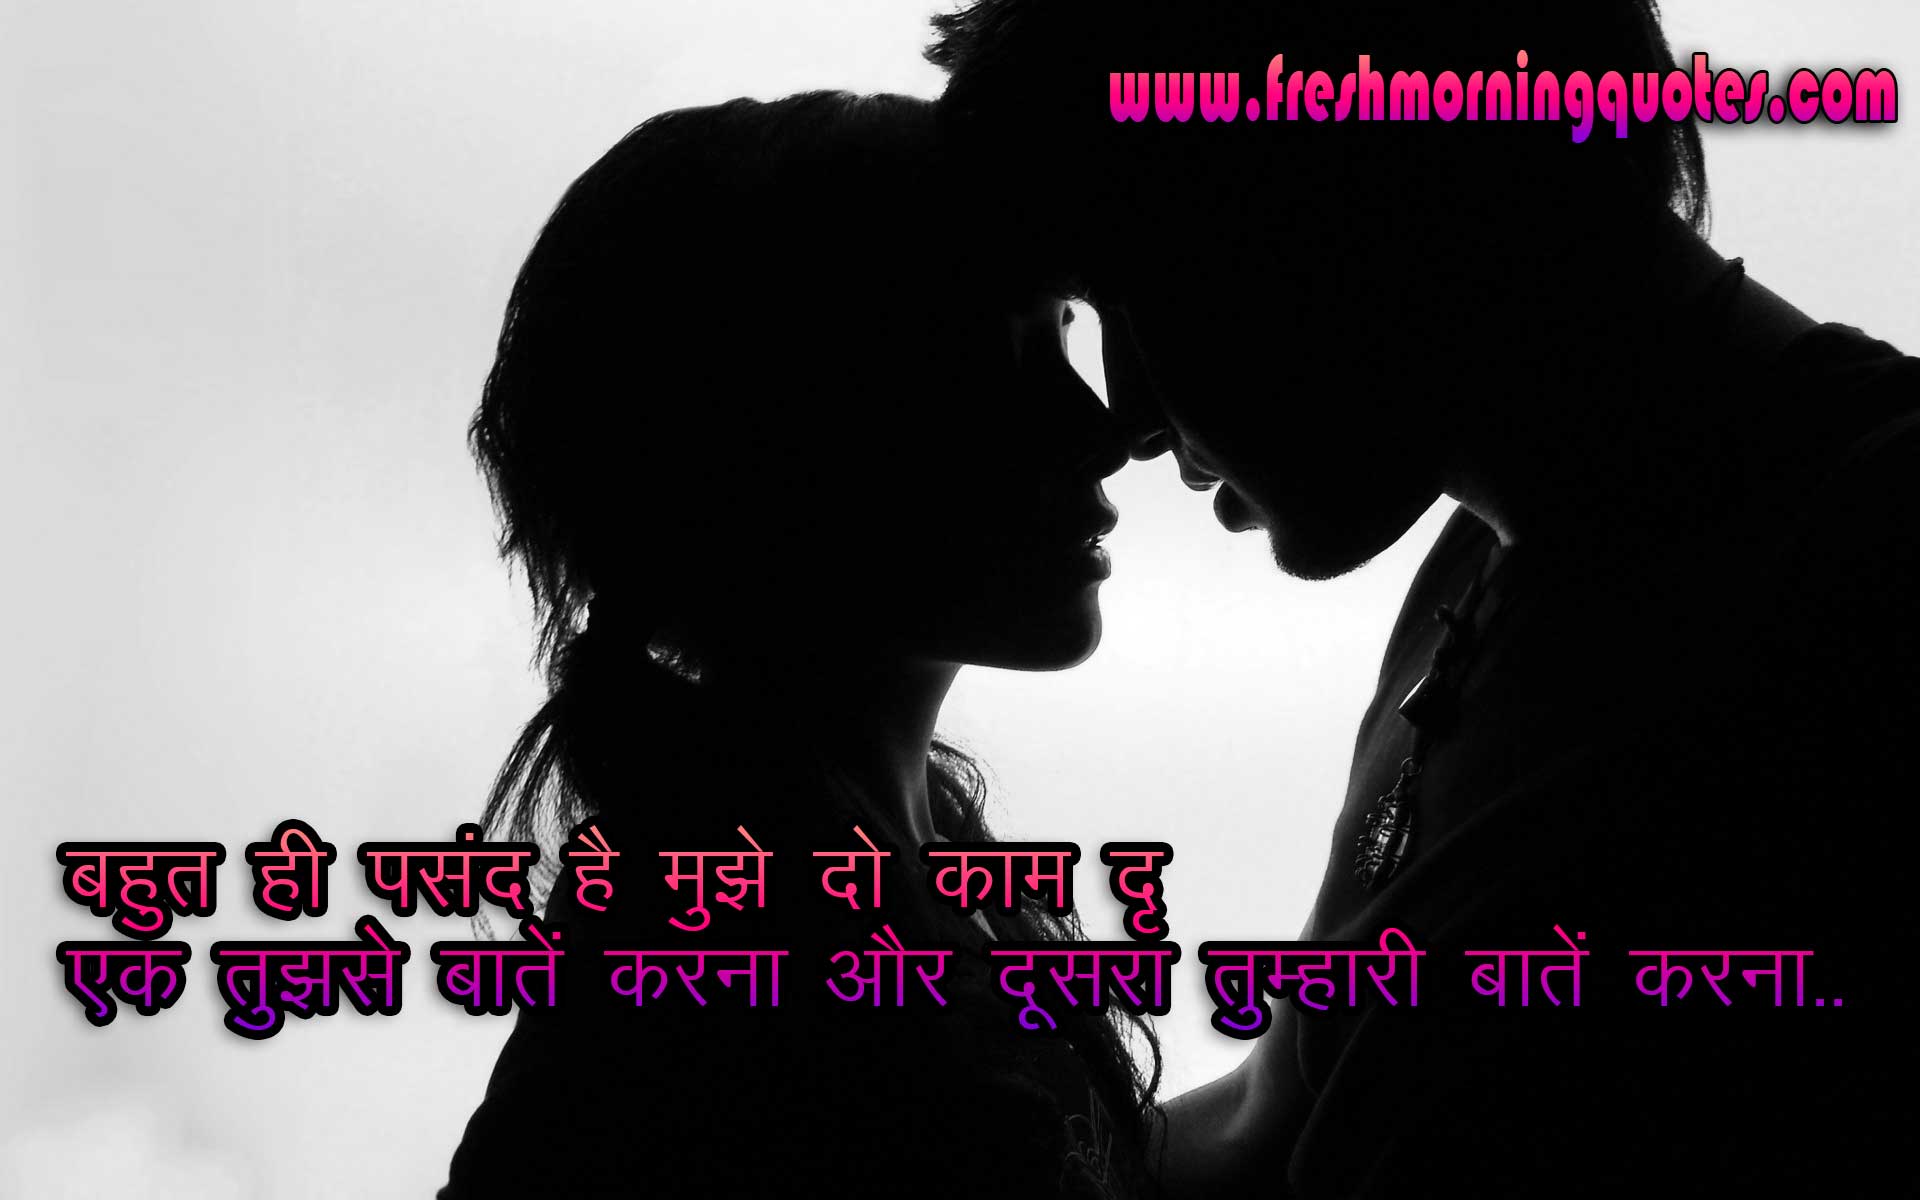 30+ Beautiful Whatsapp Love Status Images in Hindi - Freshmorningquotes